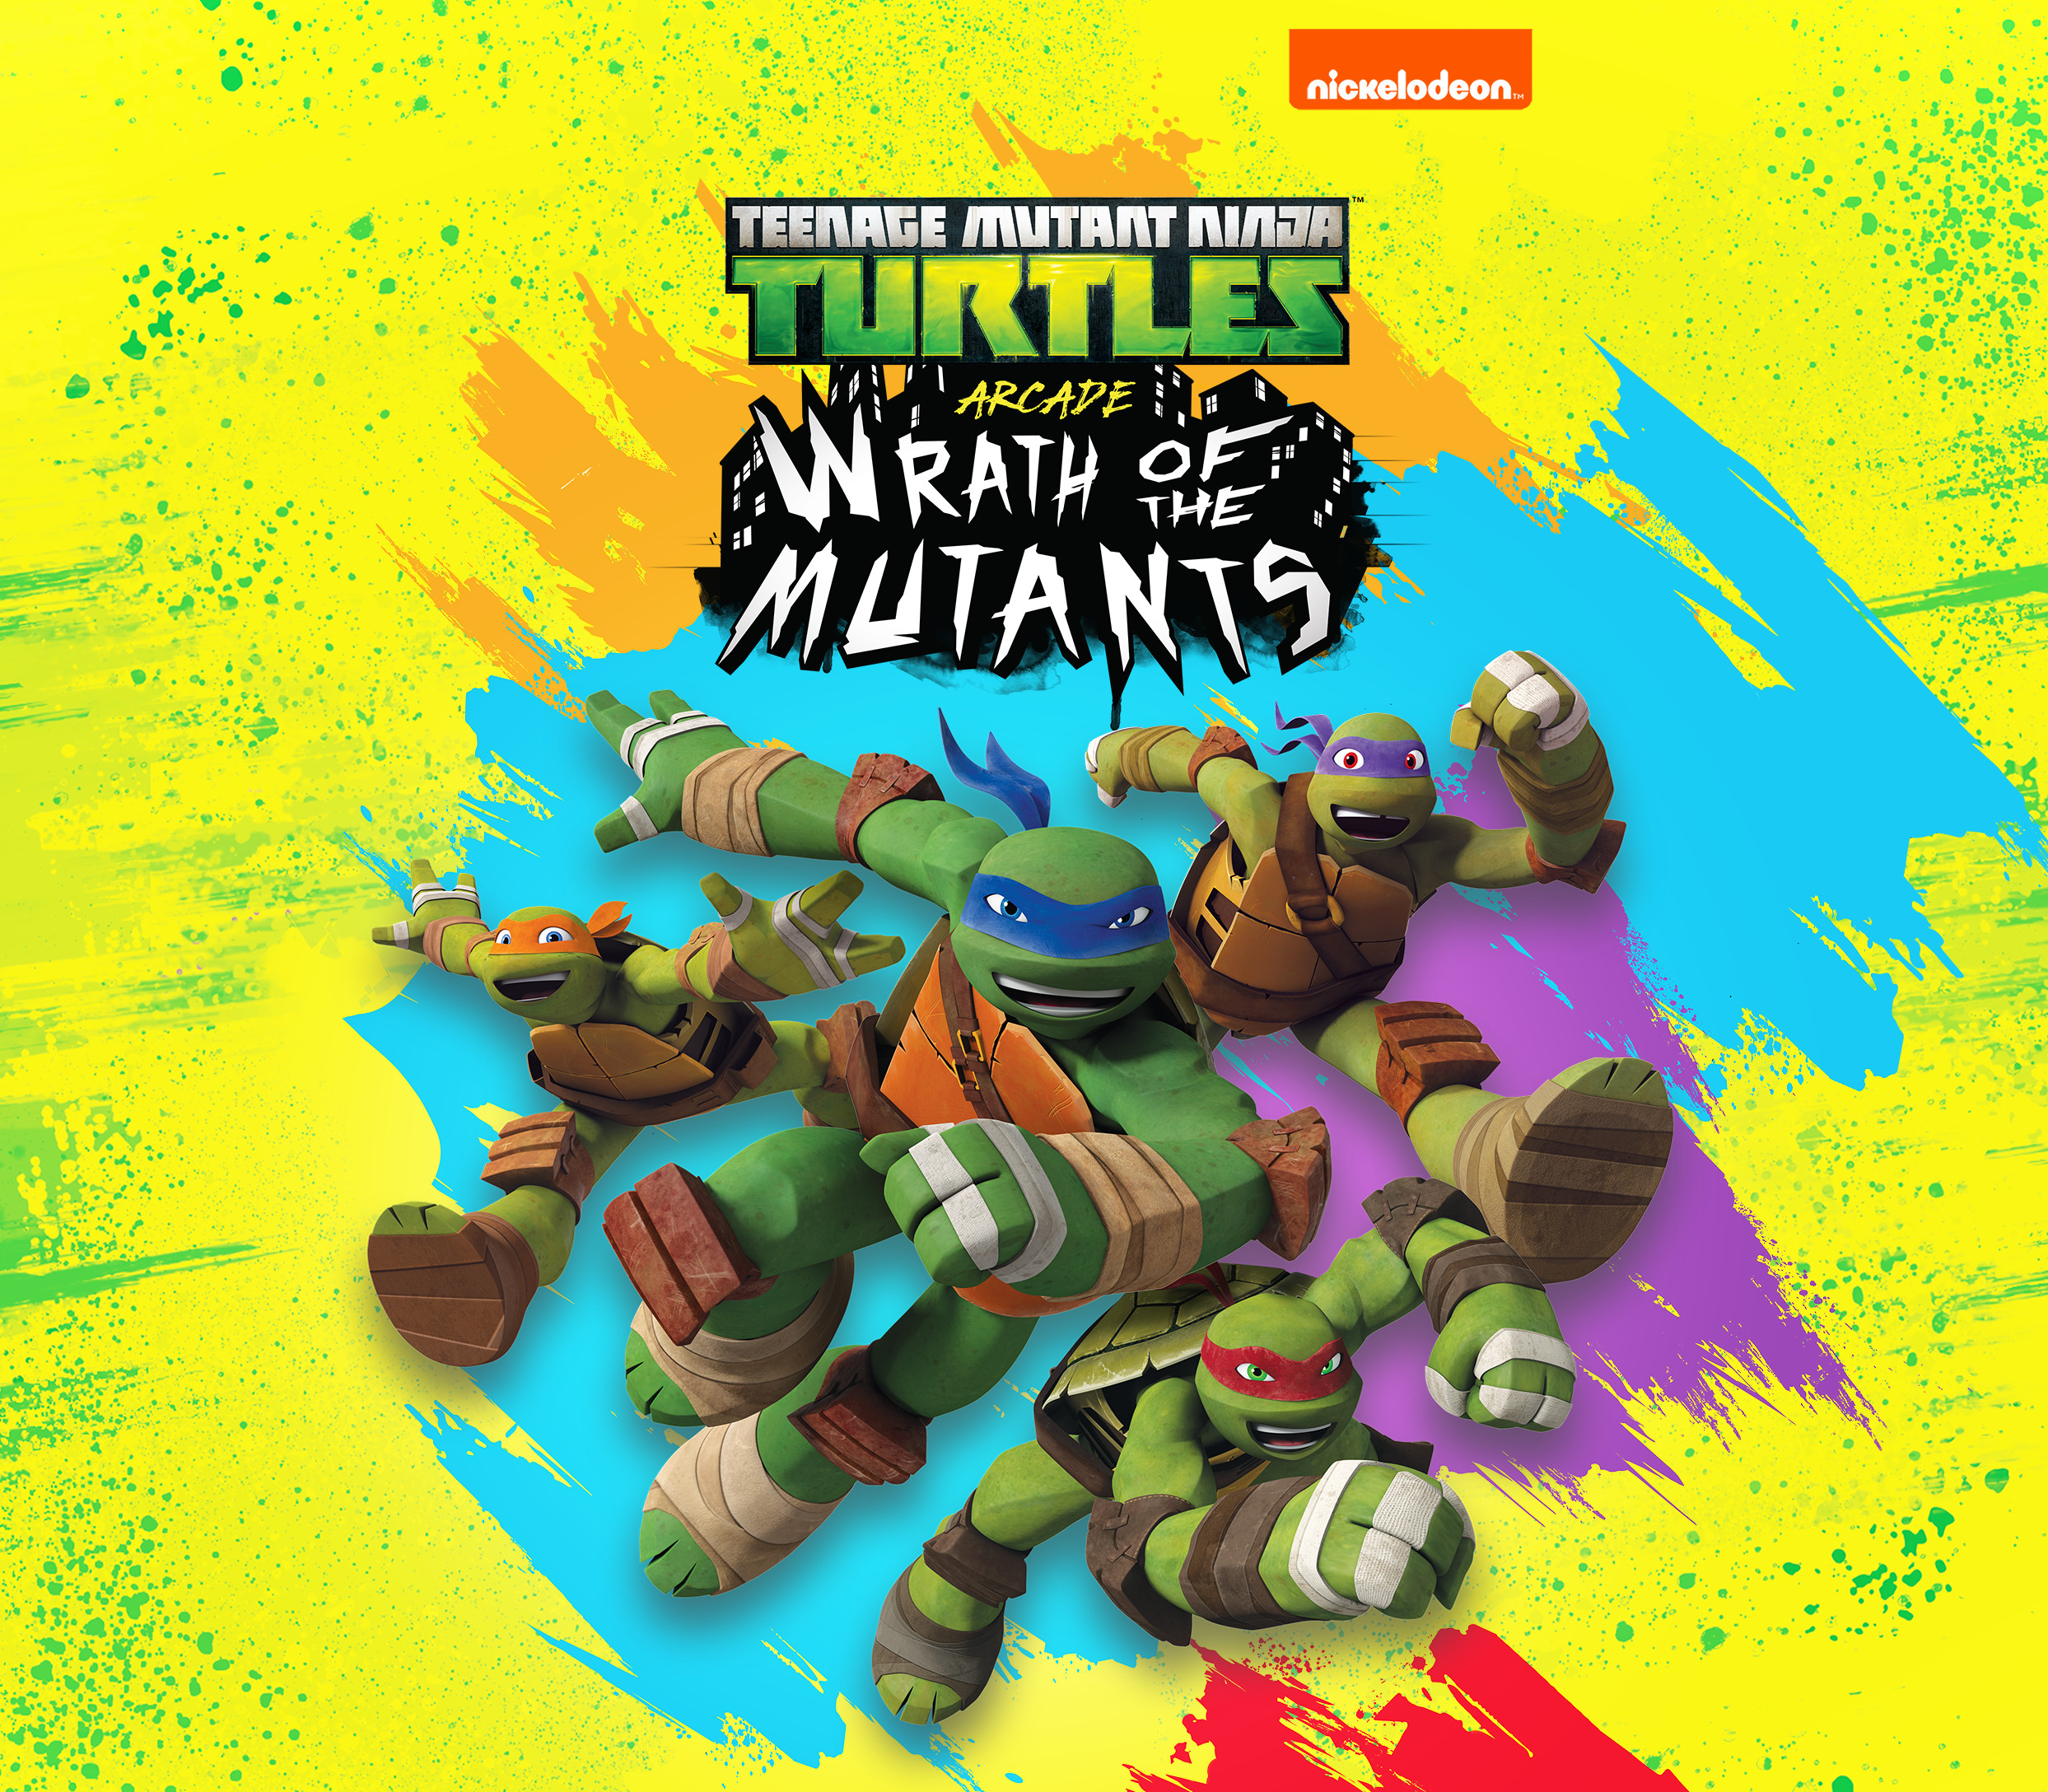 Teenage Mutant Ninja Turtles Arcade: Wrath of the Mutants XBOX One / Xbox Series X|S / Windows 10 Account